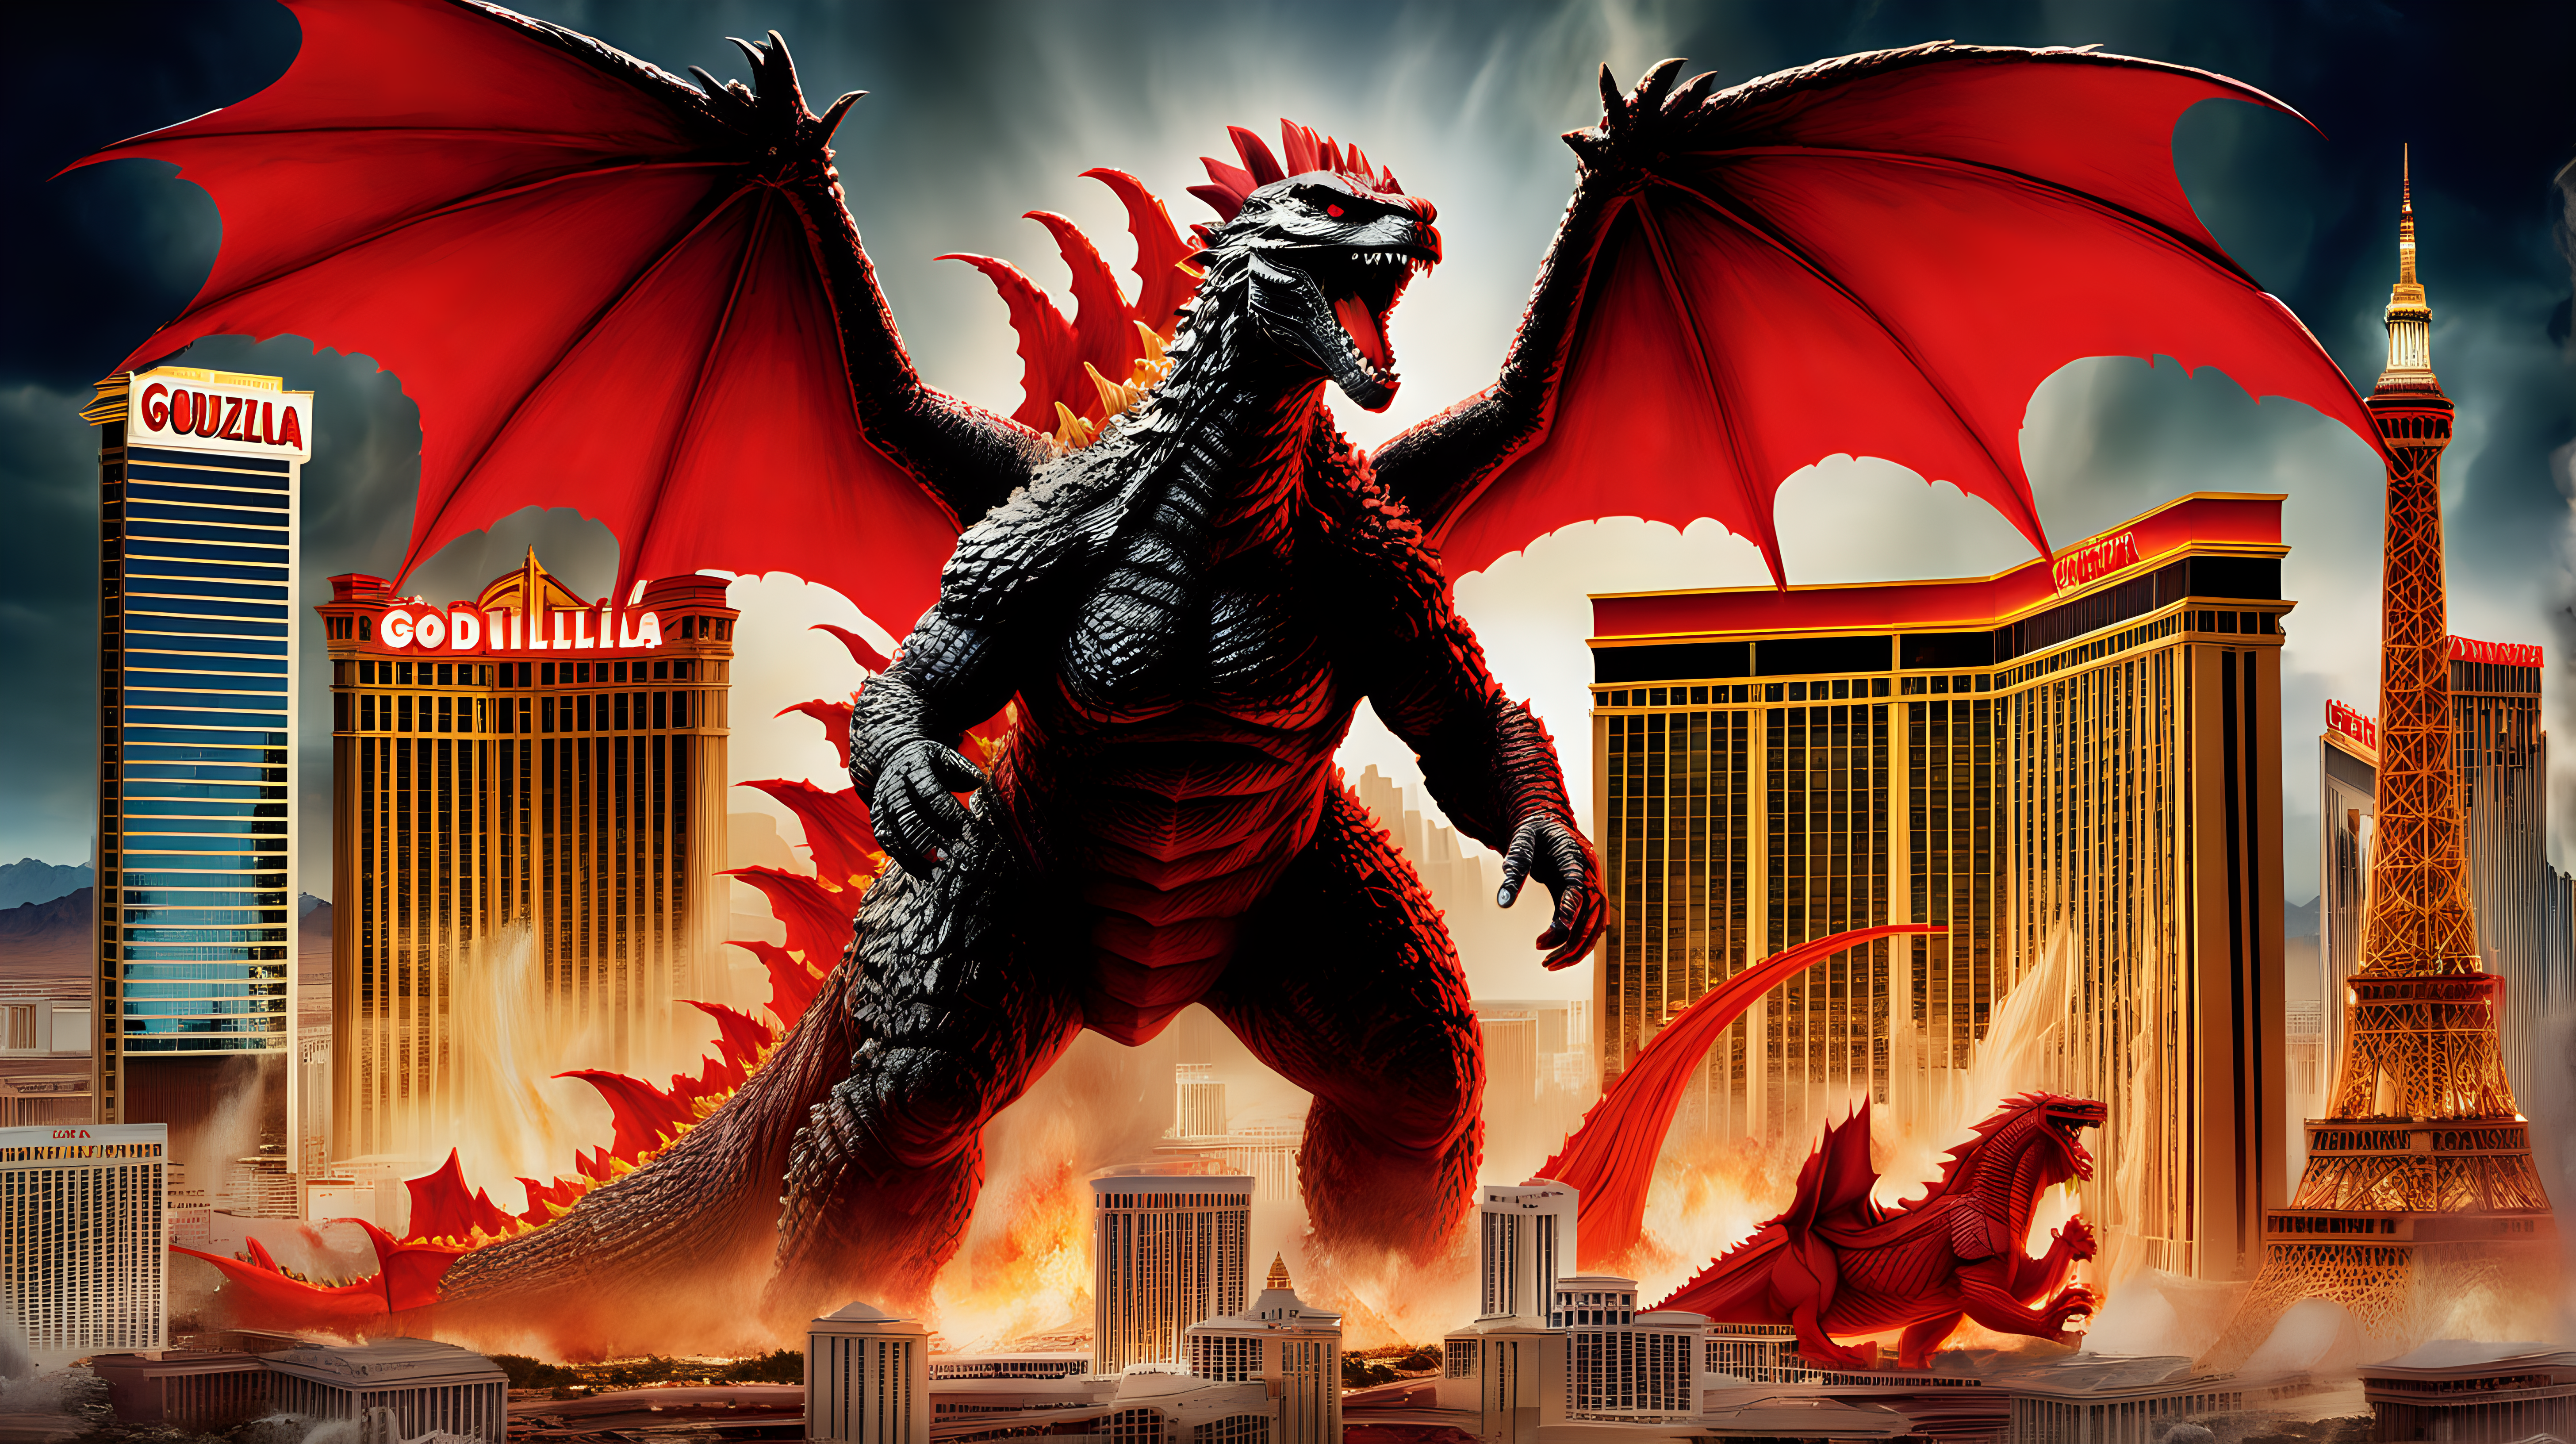 Movie poster of Godzilla & a red dragon destroying Las Vegas